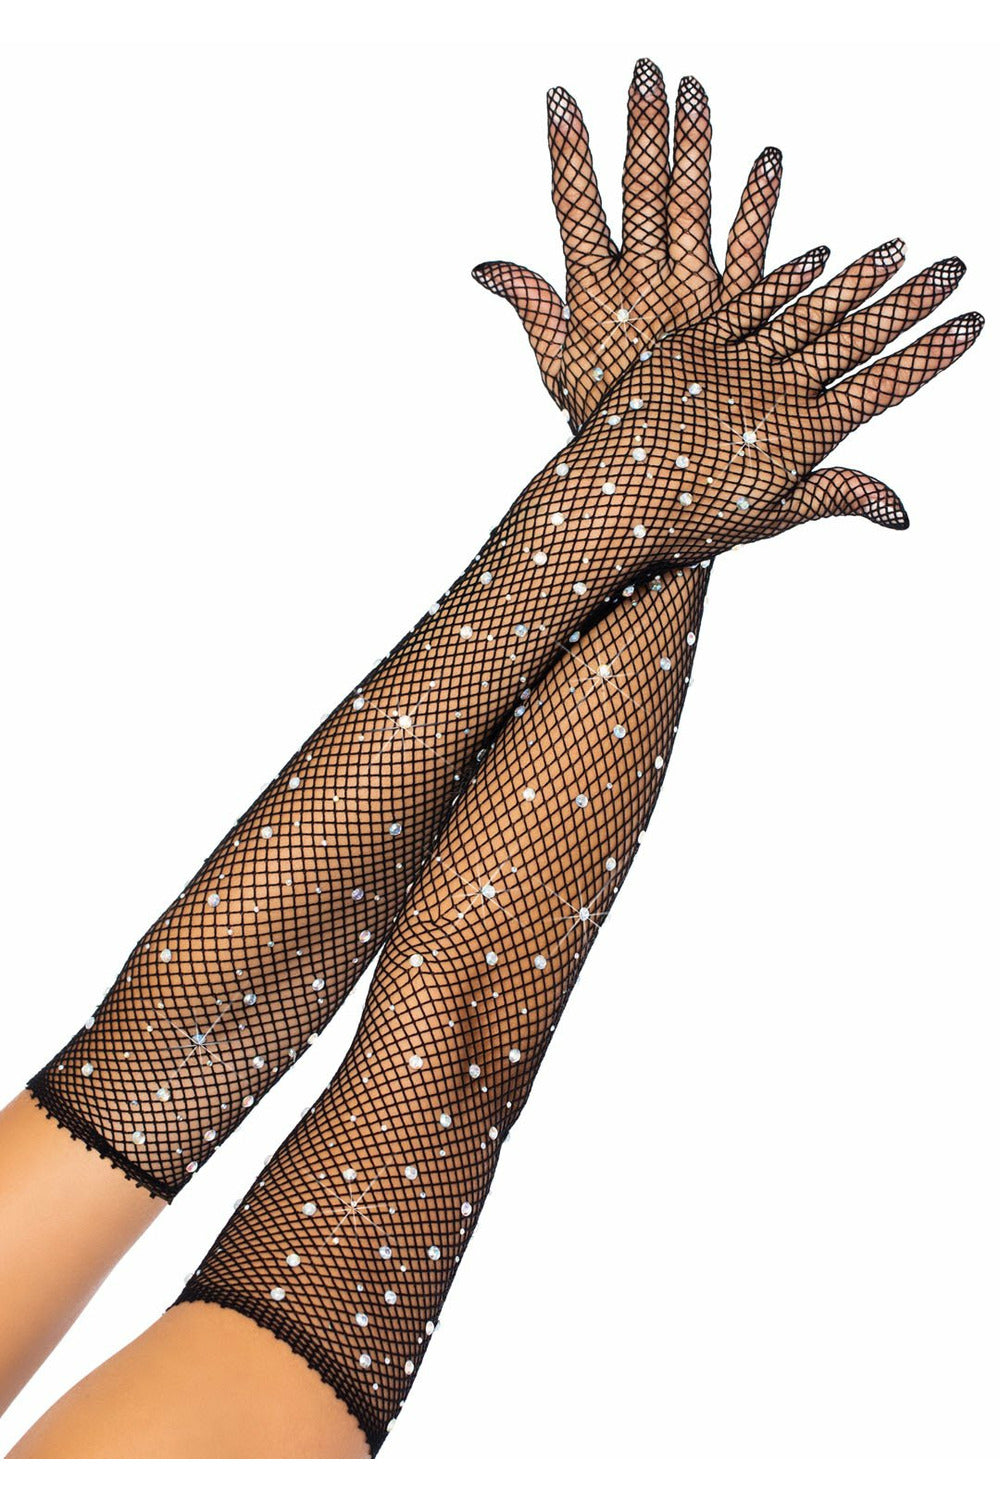 Nude Rhinestone Fishnet Gloves